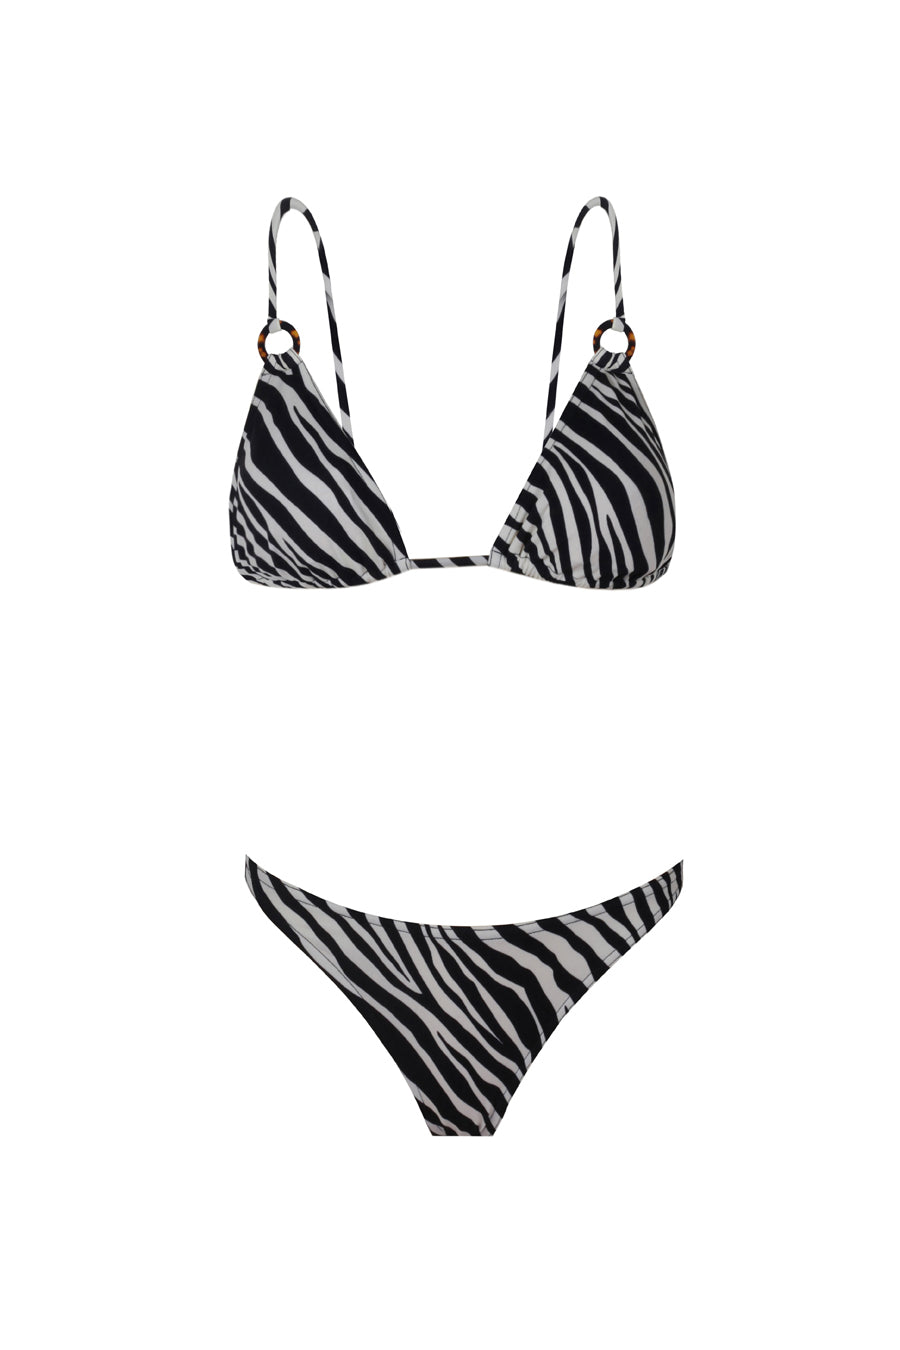 Celine Zebra Bikini